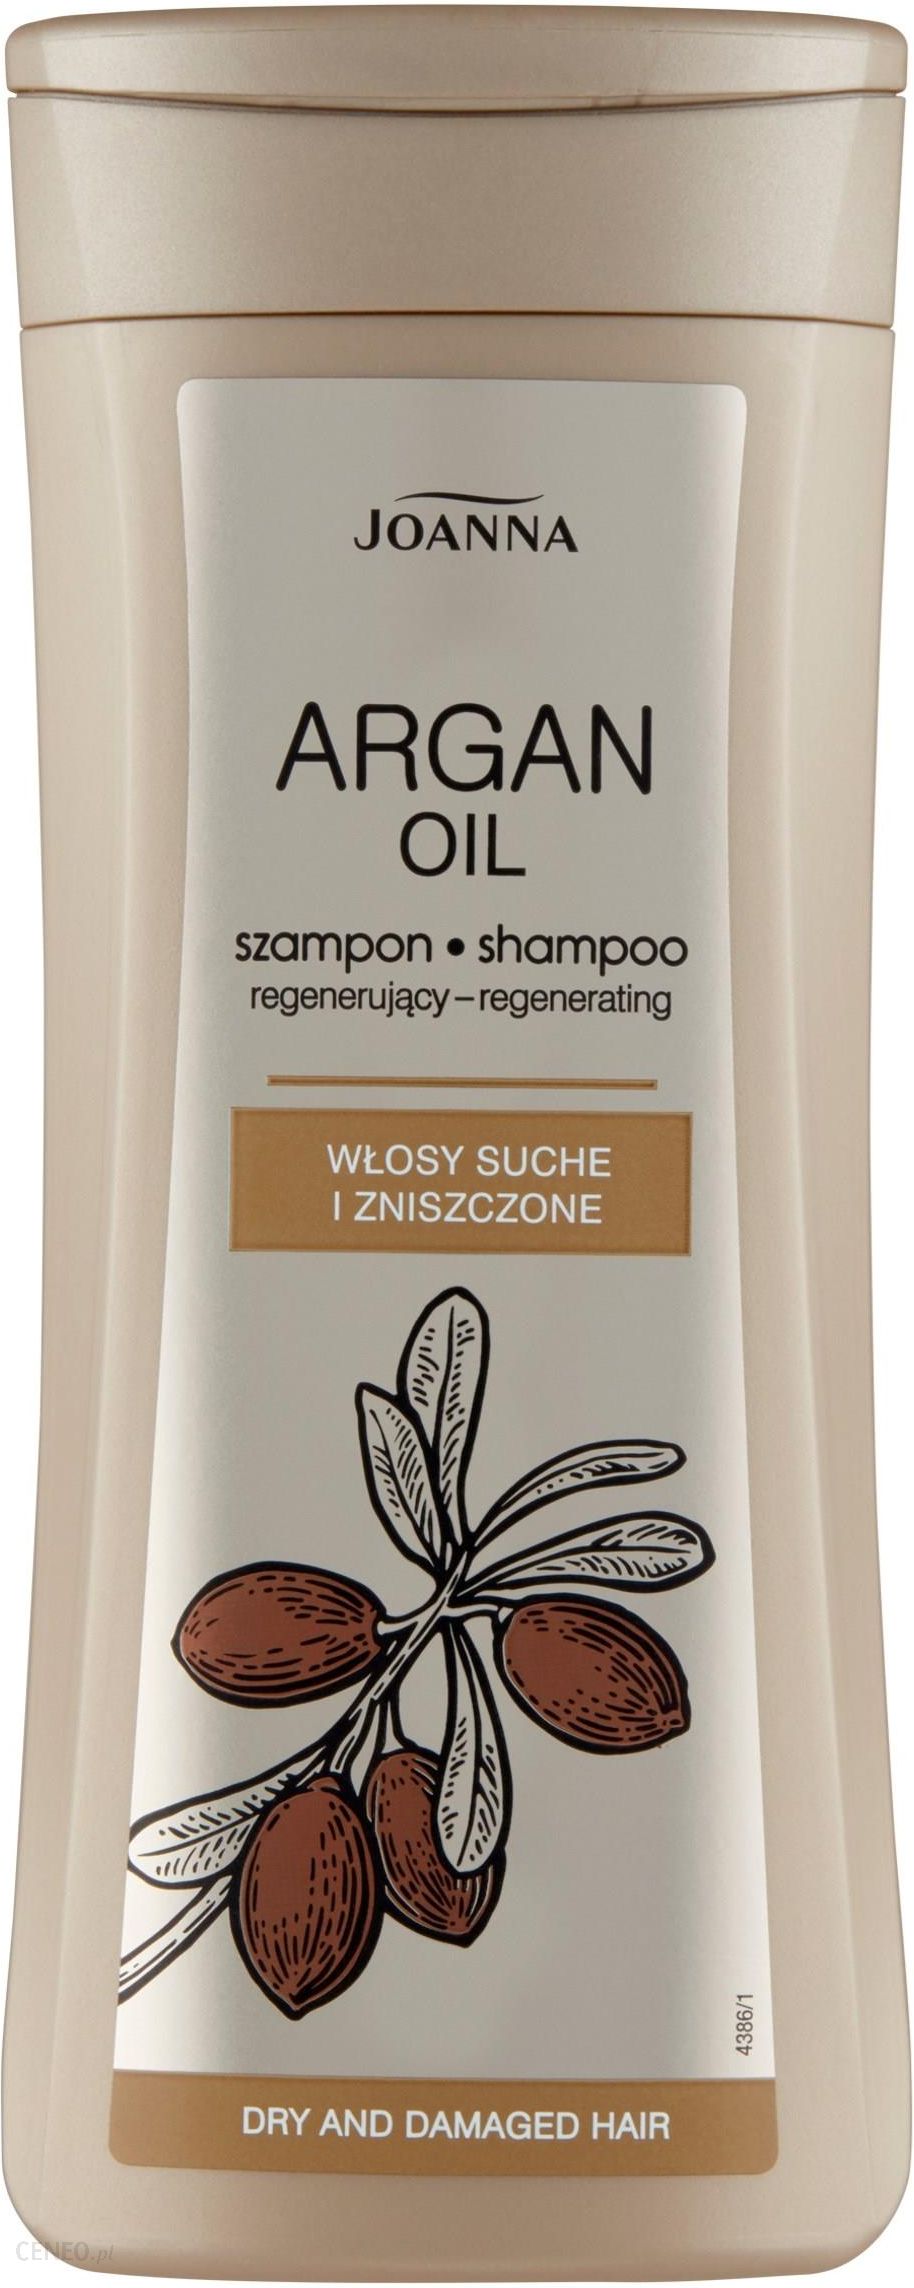 argan oil szampon joanna opinie